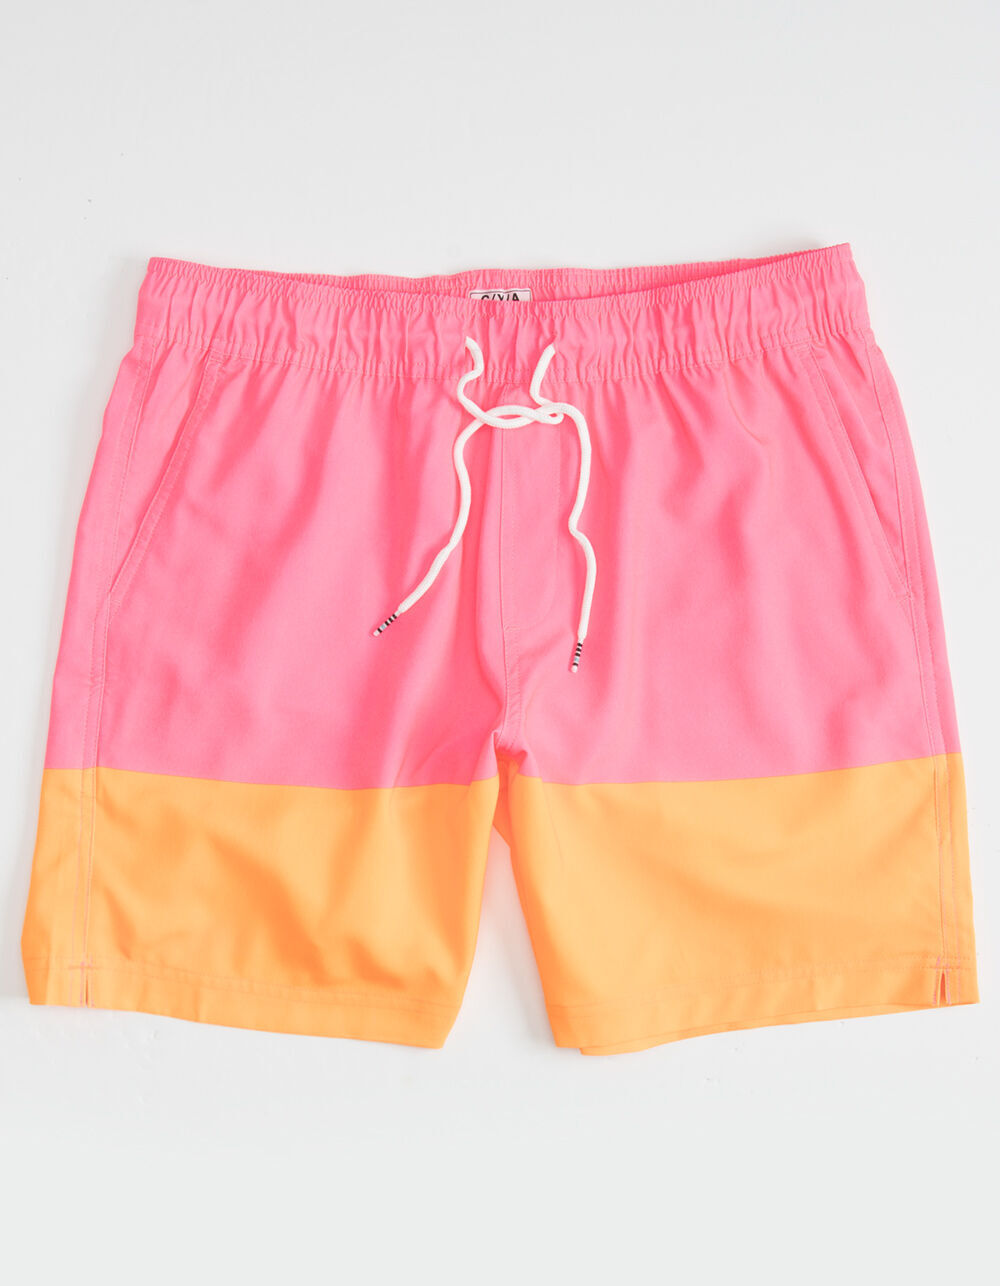 CYA Halferson Mens Neon Hot Pink Volley Shorts - NEON HOT PINK | Tillys